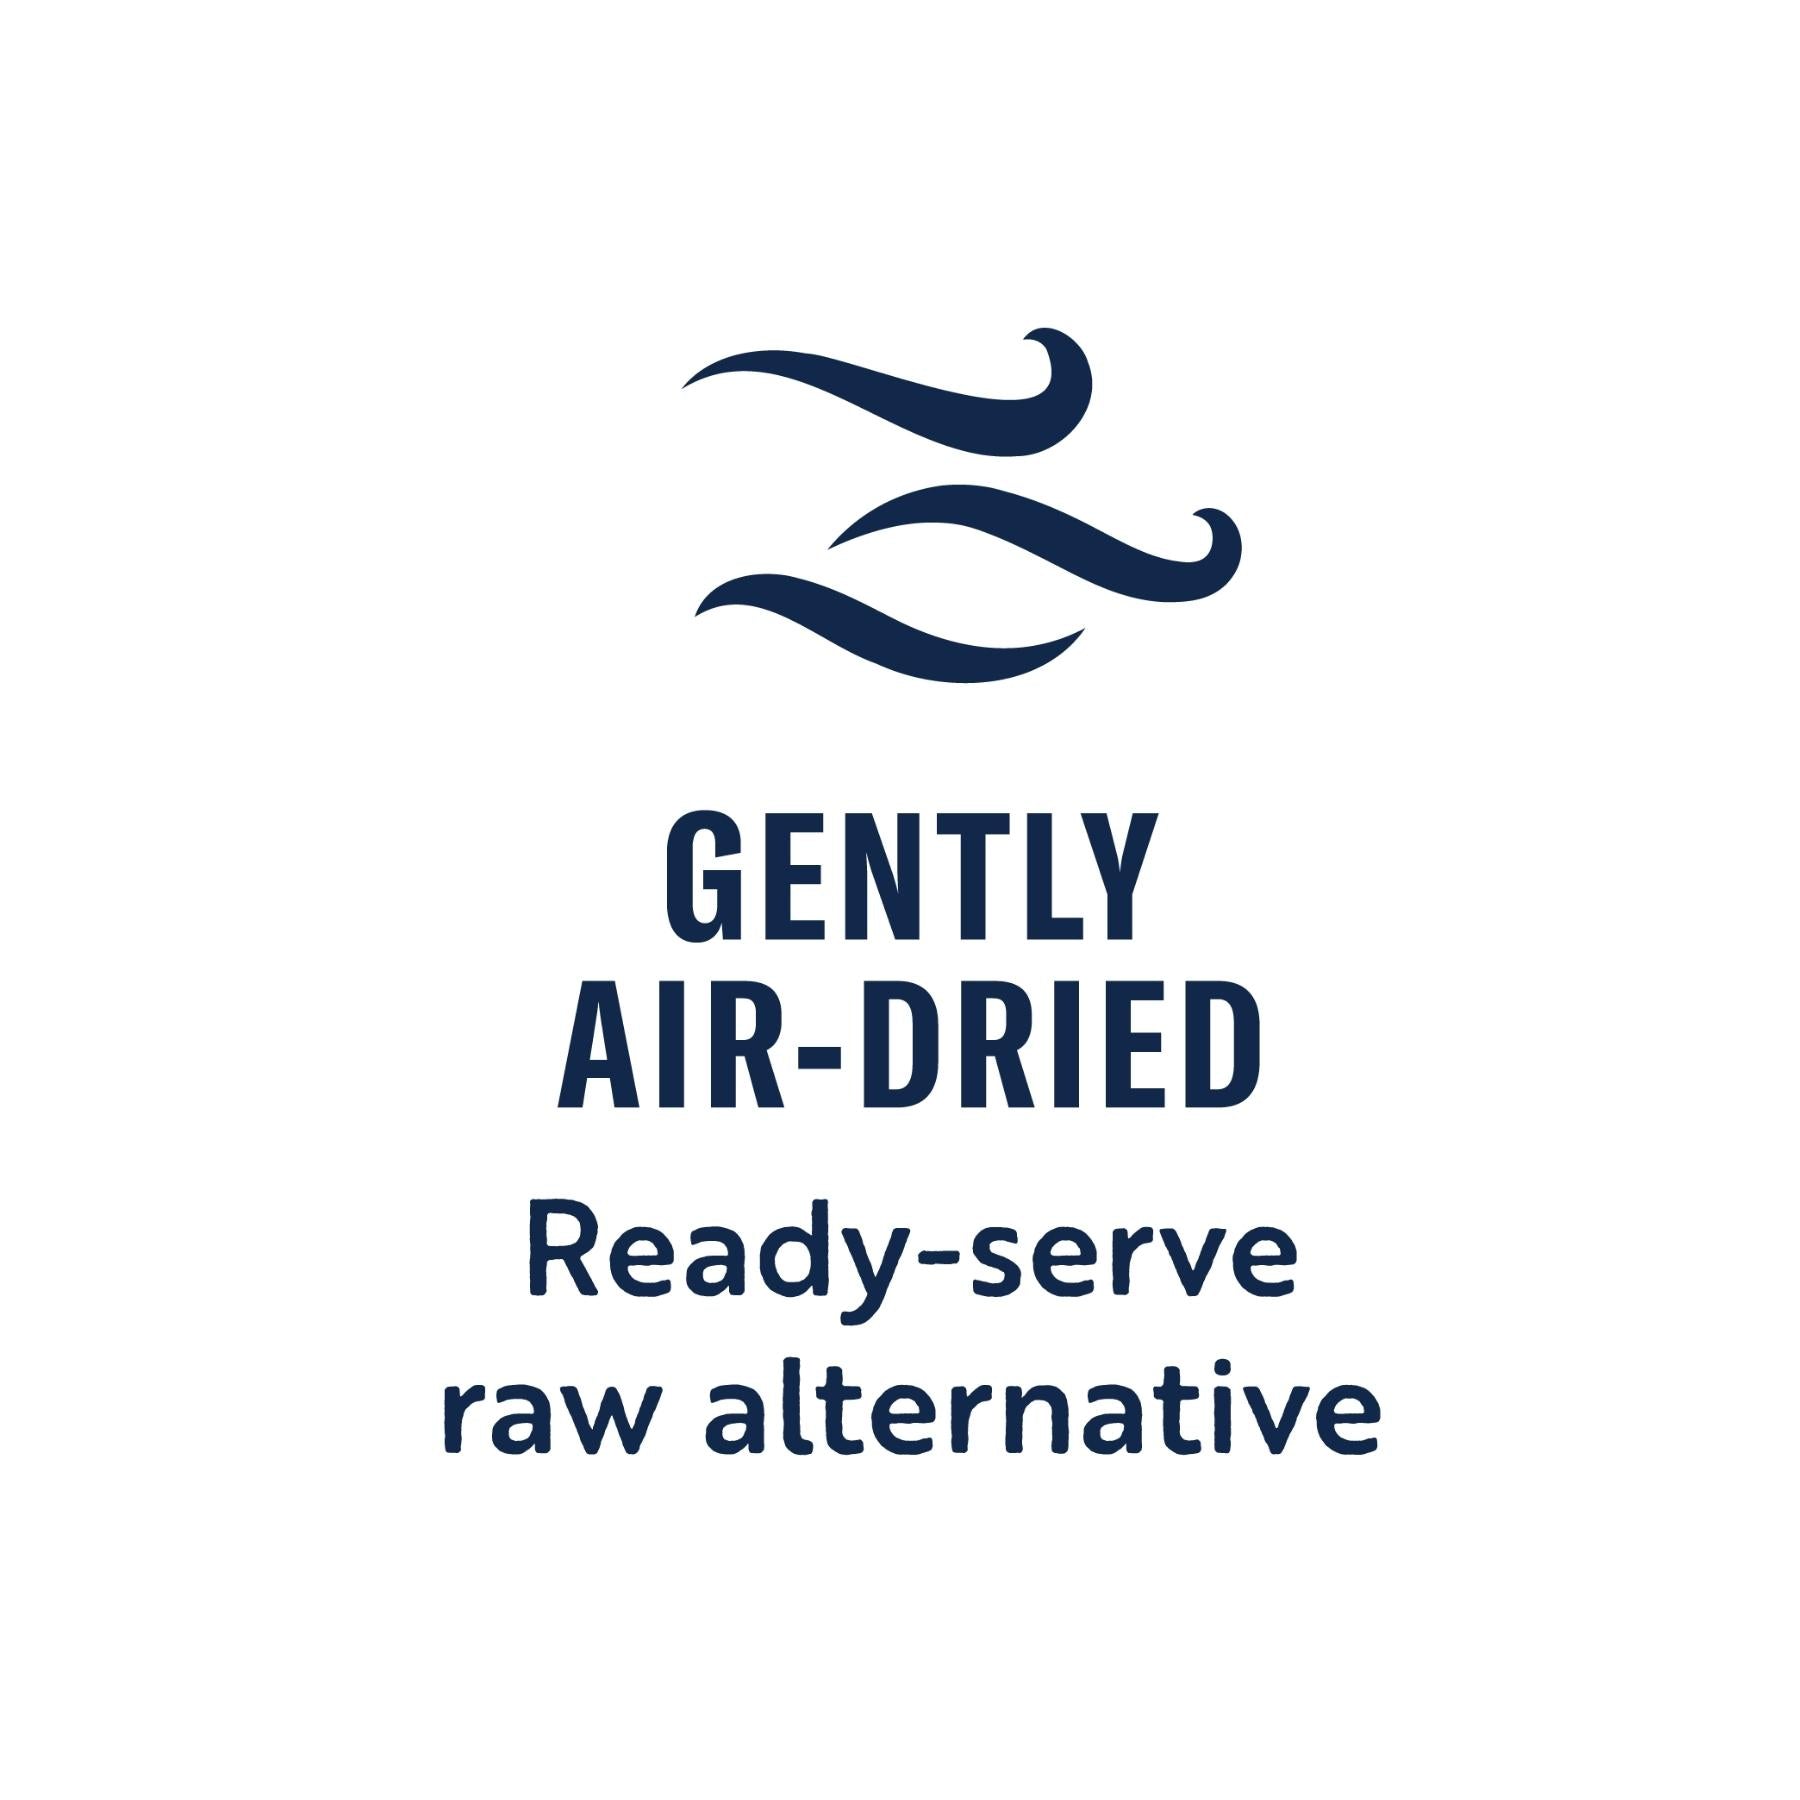 Gently Air-Dried Ready-serve raw alternative.